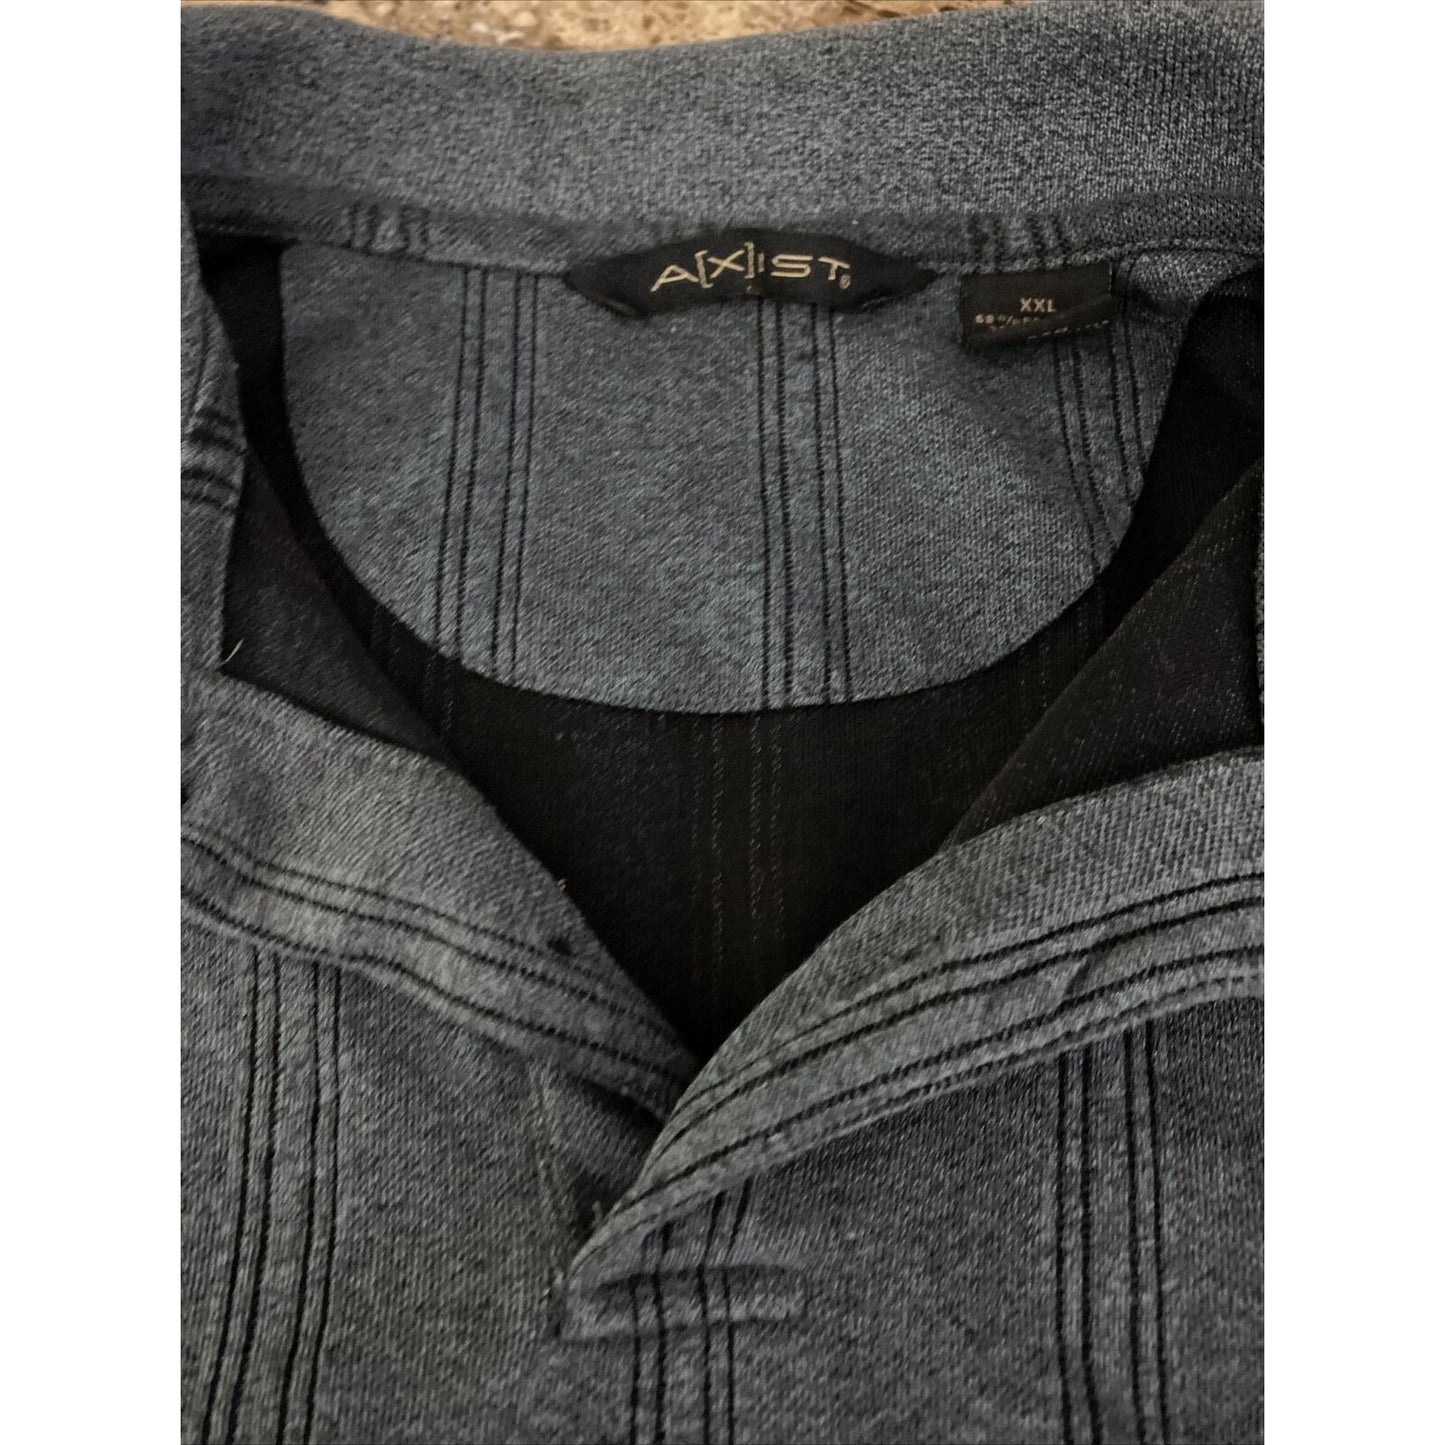 AXIST Men's XXL Dark Gray Stripes Knit Polyester-Cotton Polo Shirt